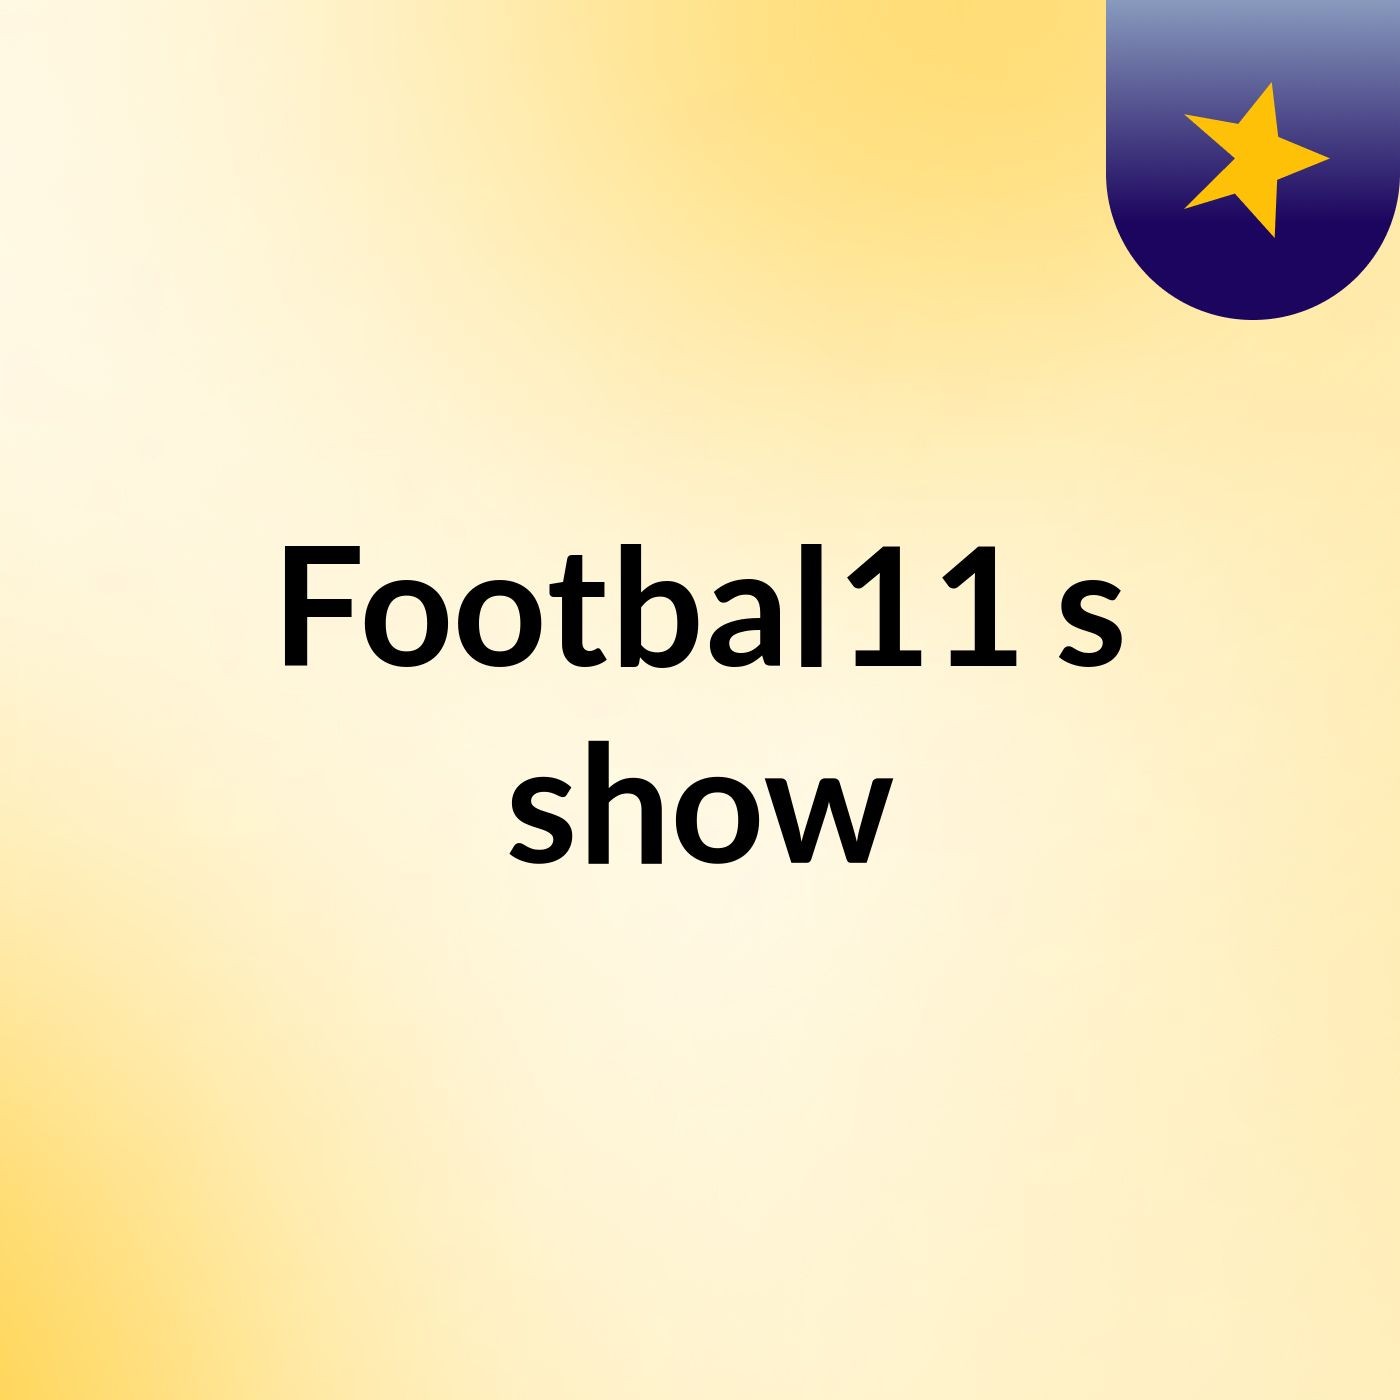 Footbal11's show